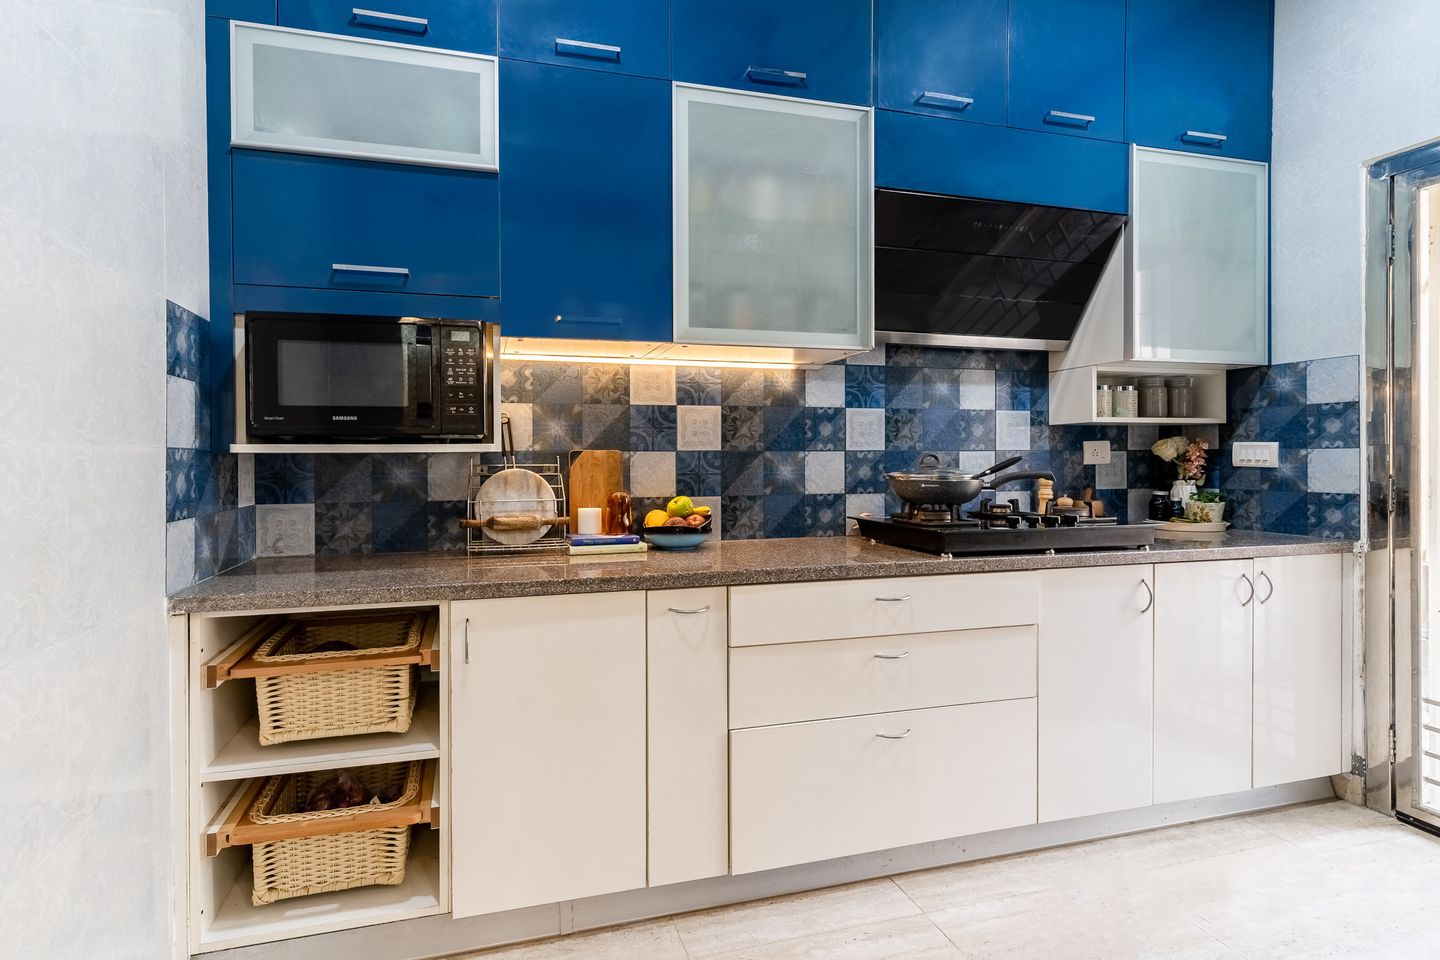 Ceramic Matte Blue And White Grid Kitchen Tile Design - Livspace